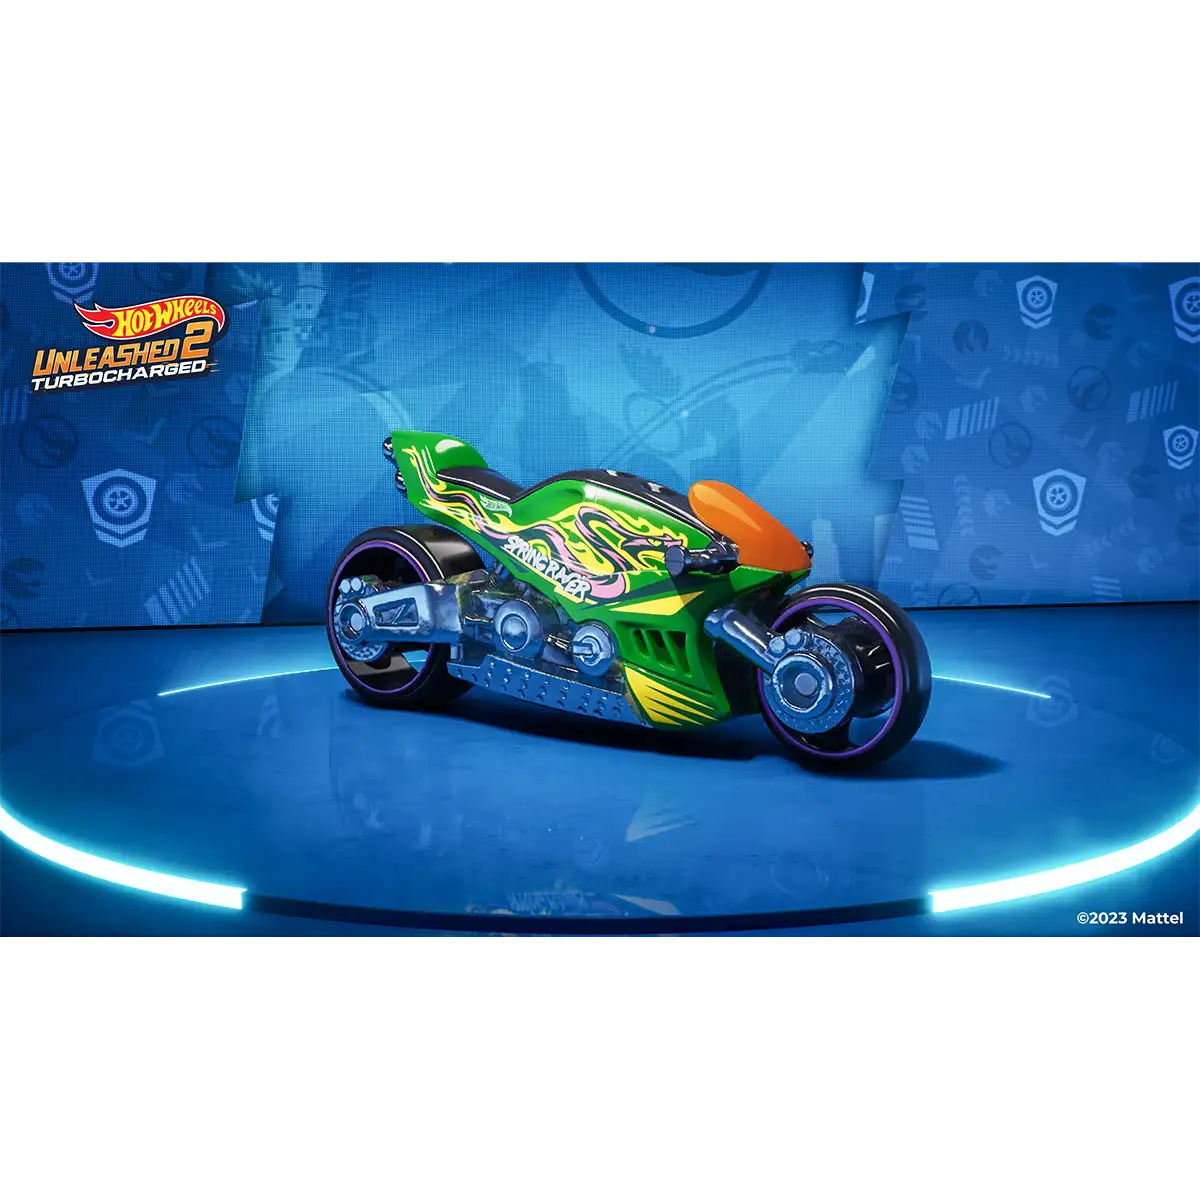 Hot Wheels Unleashed™ 2 Turbocharged (PS4) Thumbnail 5